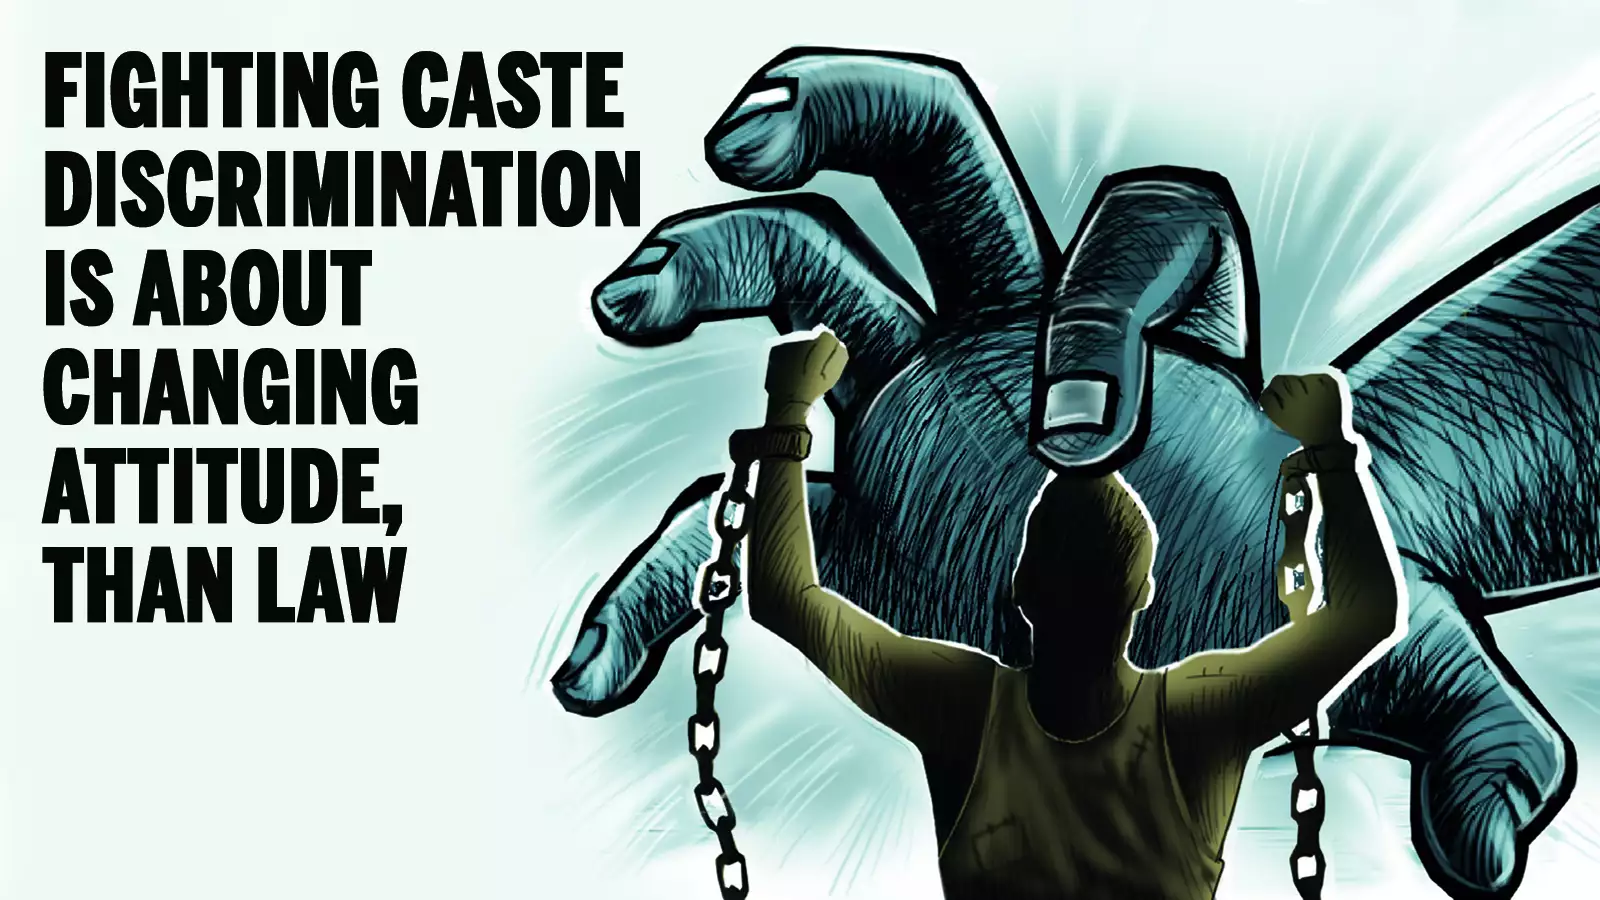 brief essay on caste discrimination